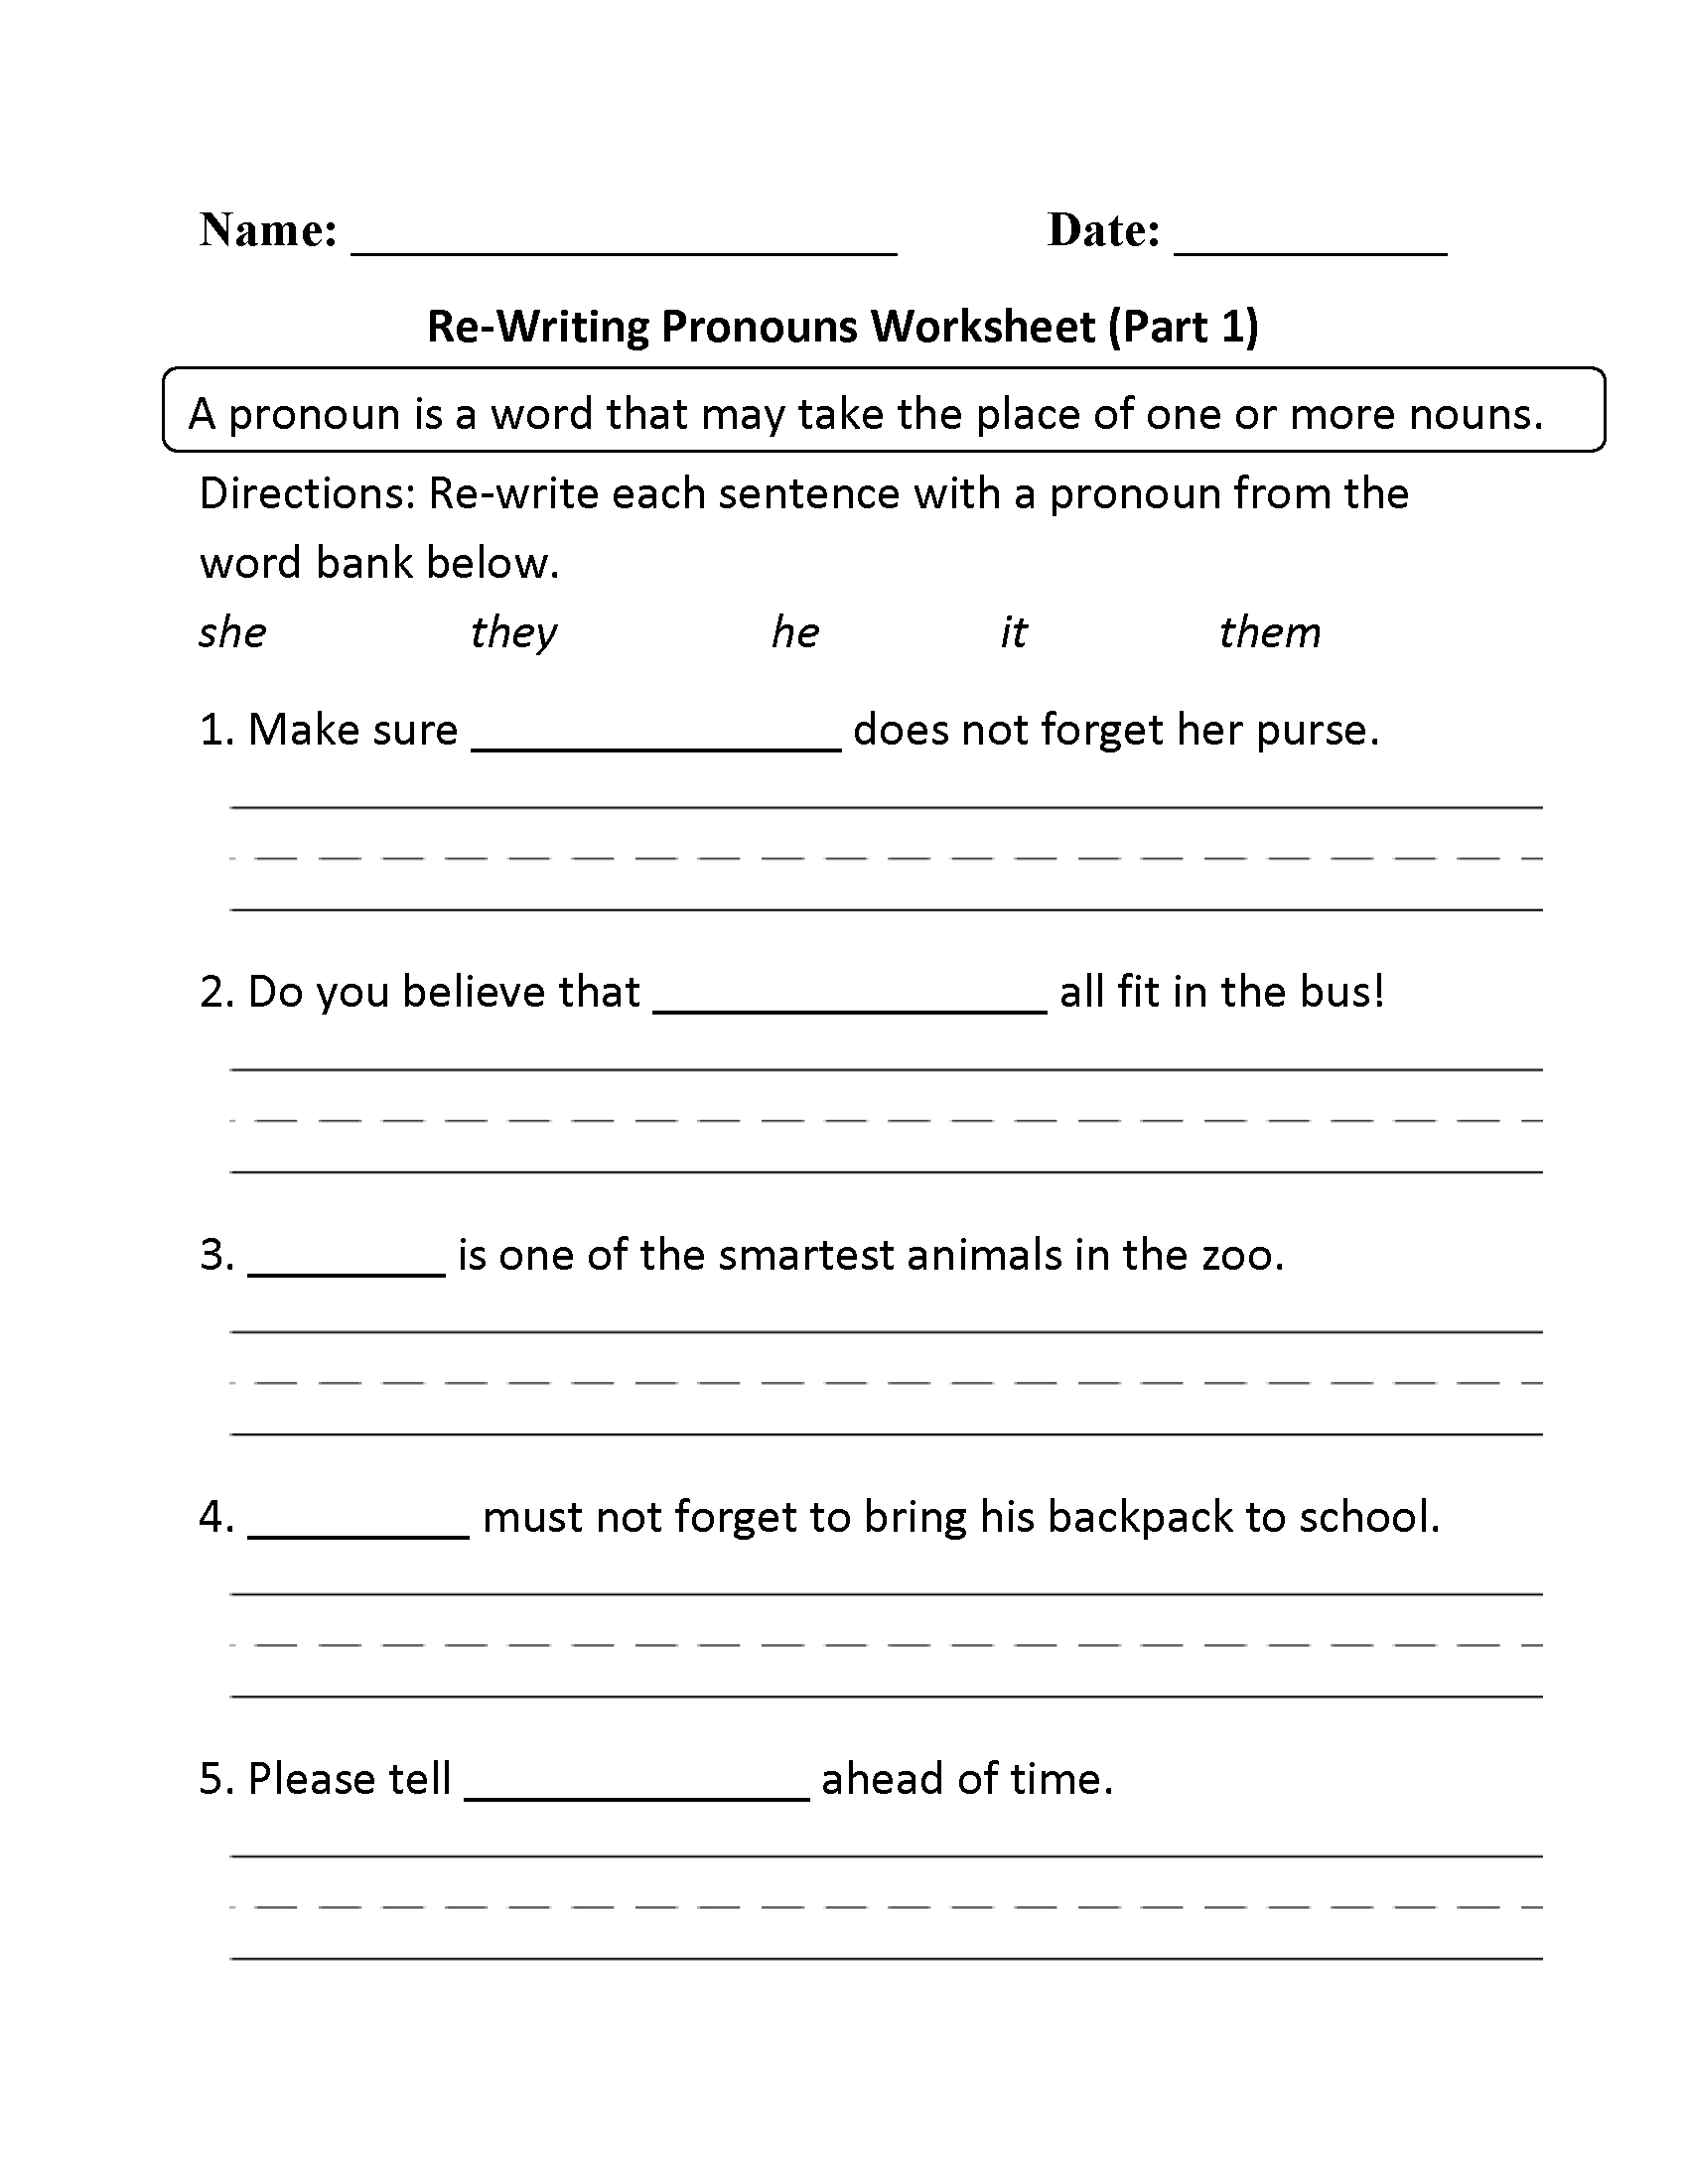 pronouns-worksheets-regular-pronouns-worksheets-db-excel